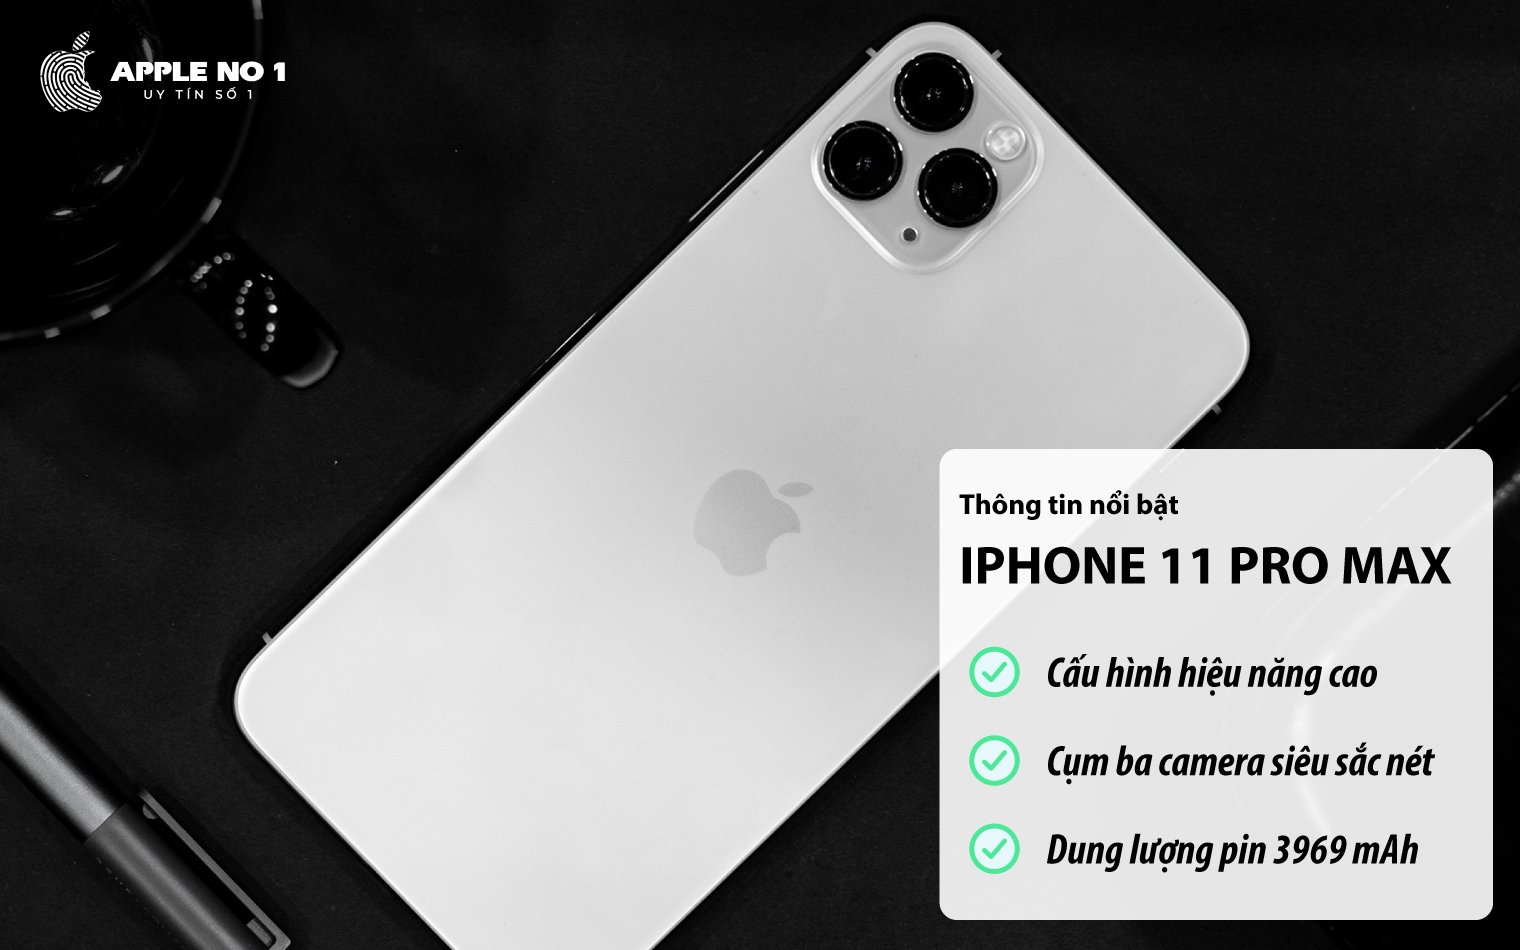 bo ba camera goc cuc rong tren iPhone 11 Pro Max